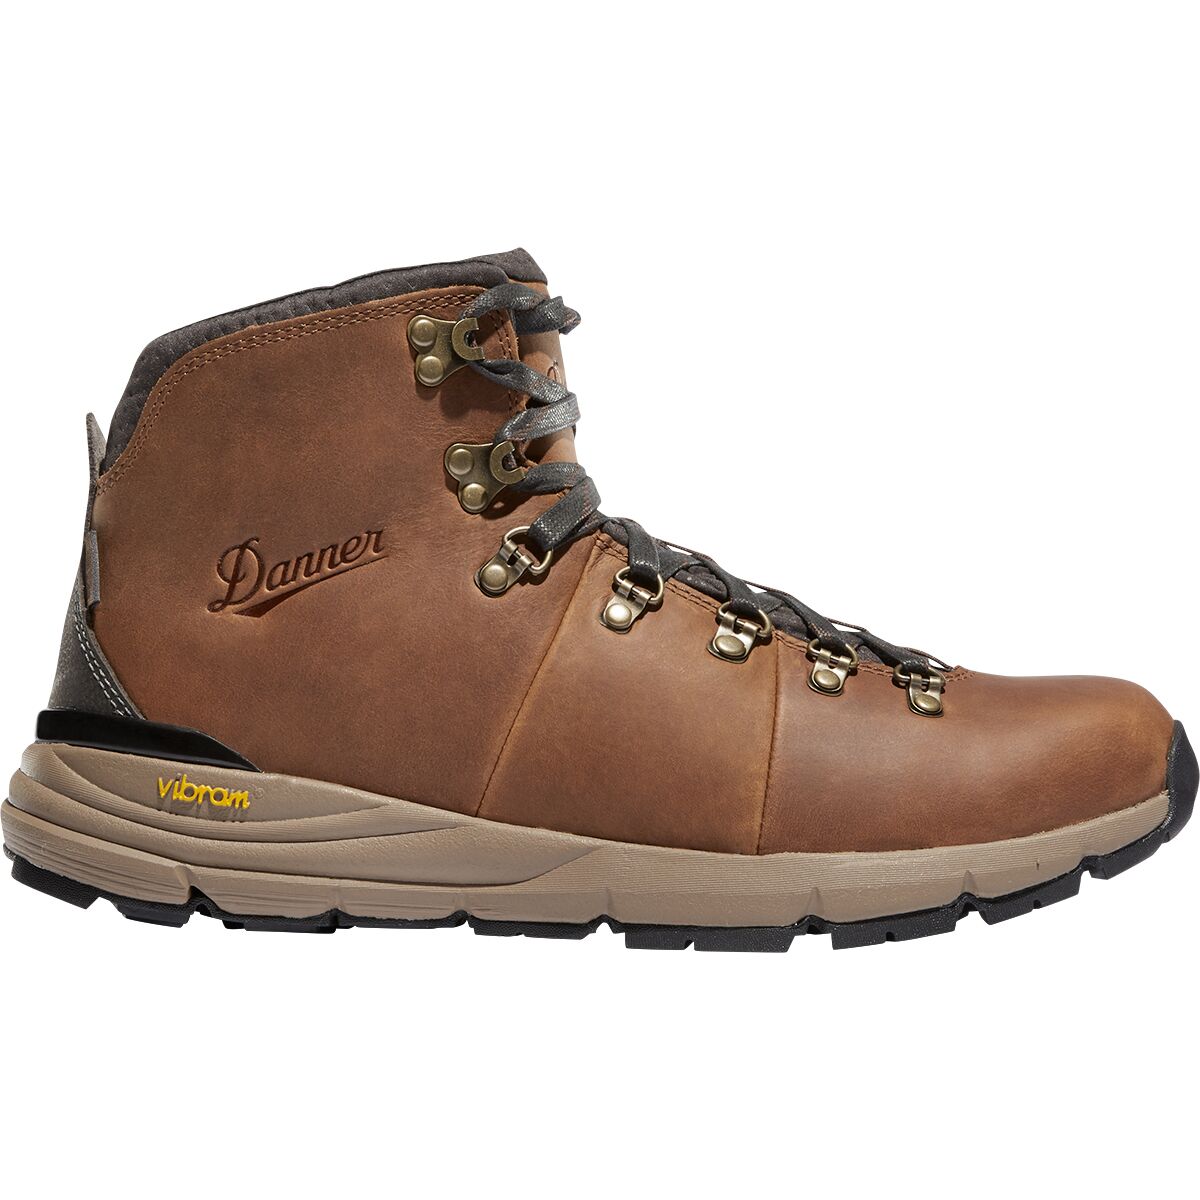 Danner Mountain 600 Full-Grain Wide Hiking Boot - Men's